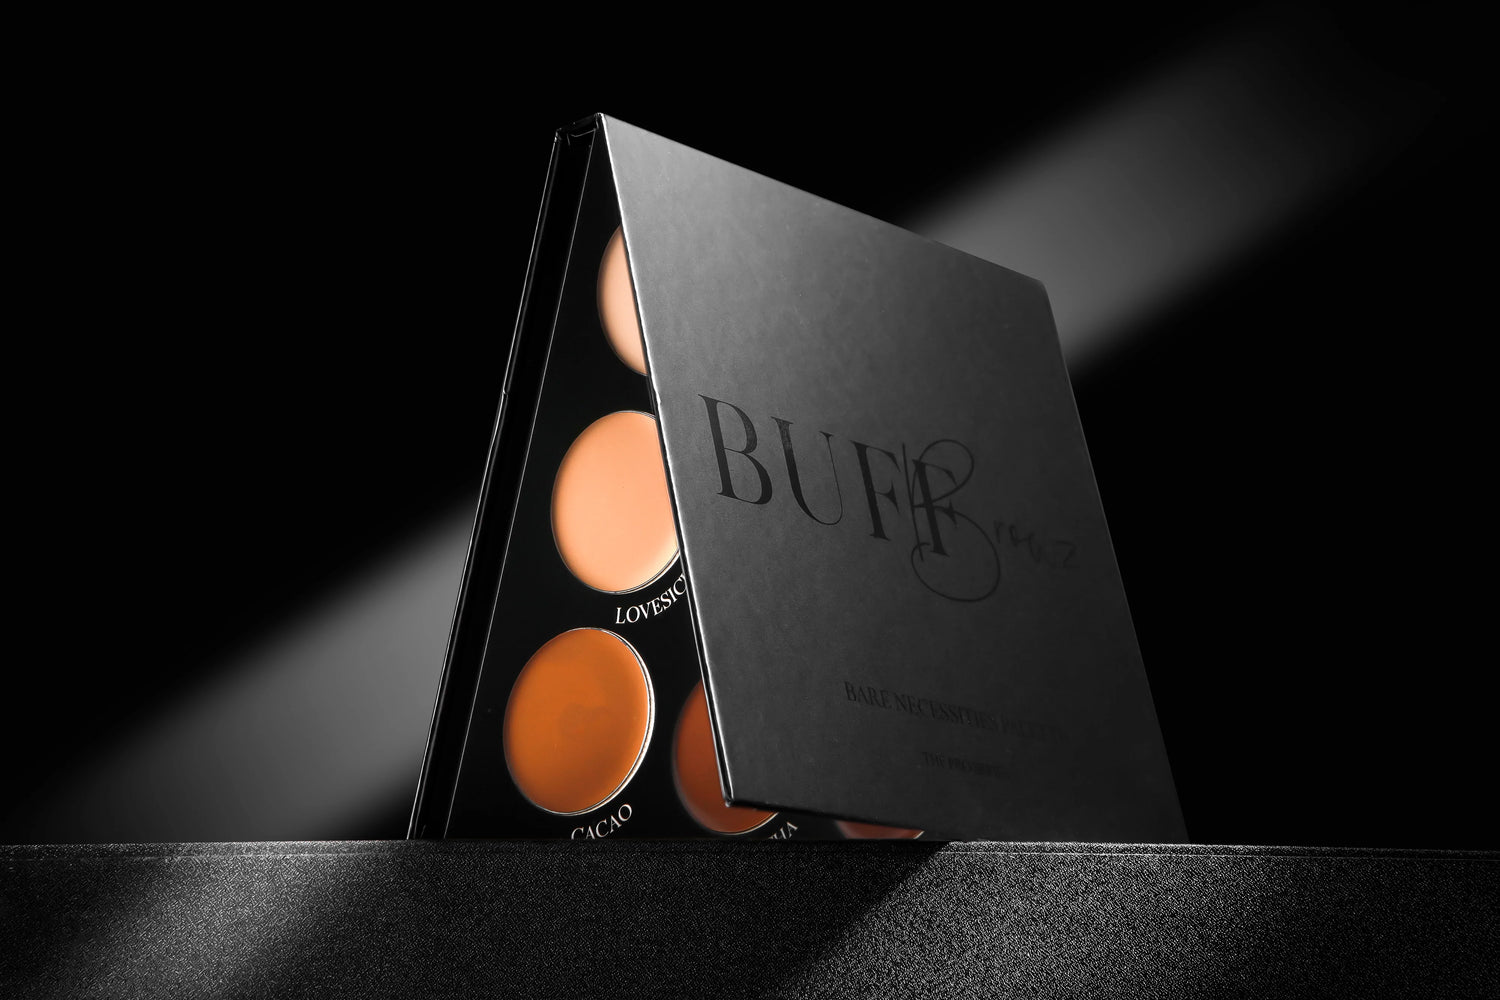 BUFF BROWZ - Bare Necessities Palette - Pro Series